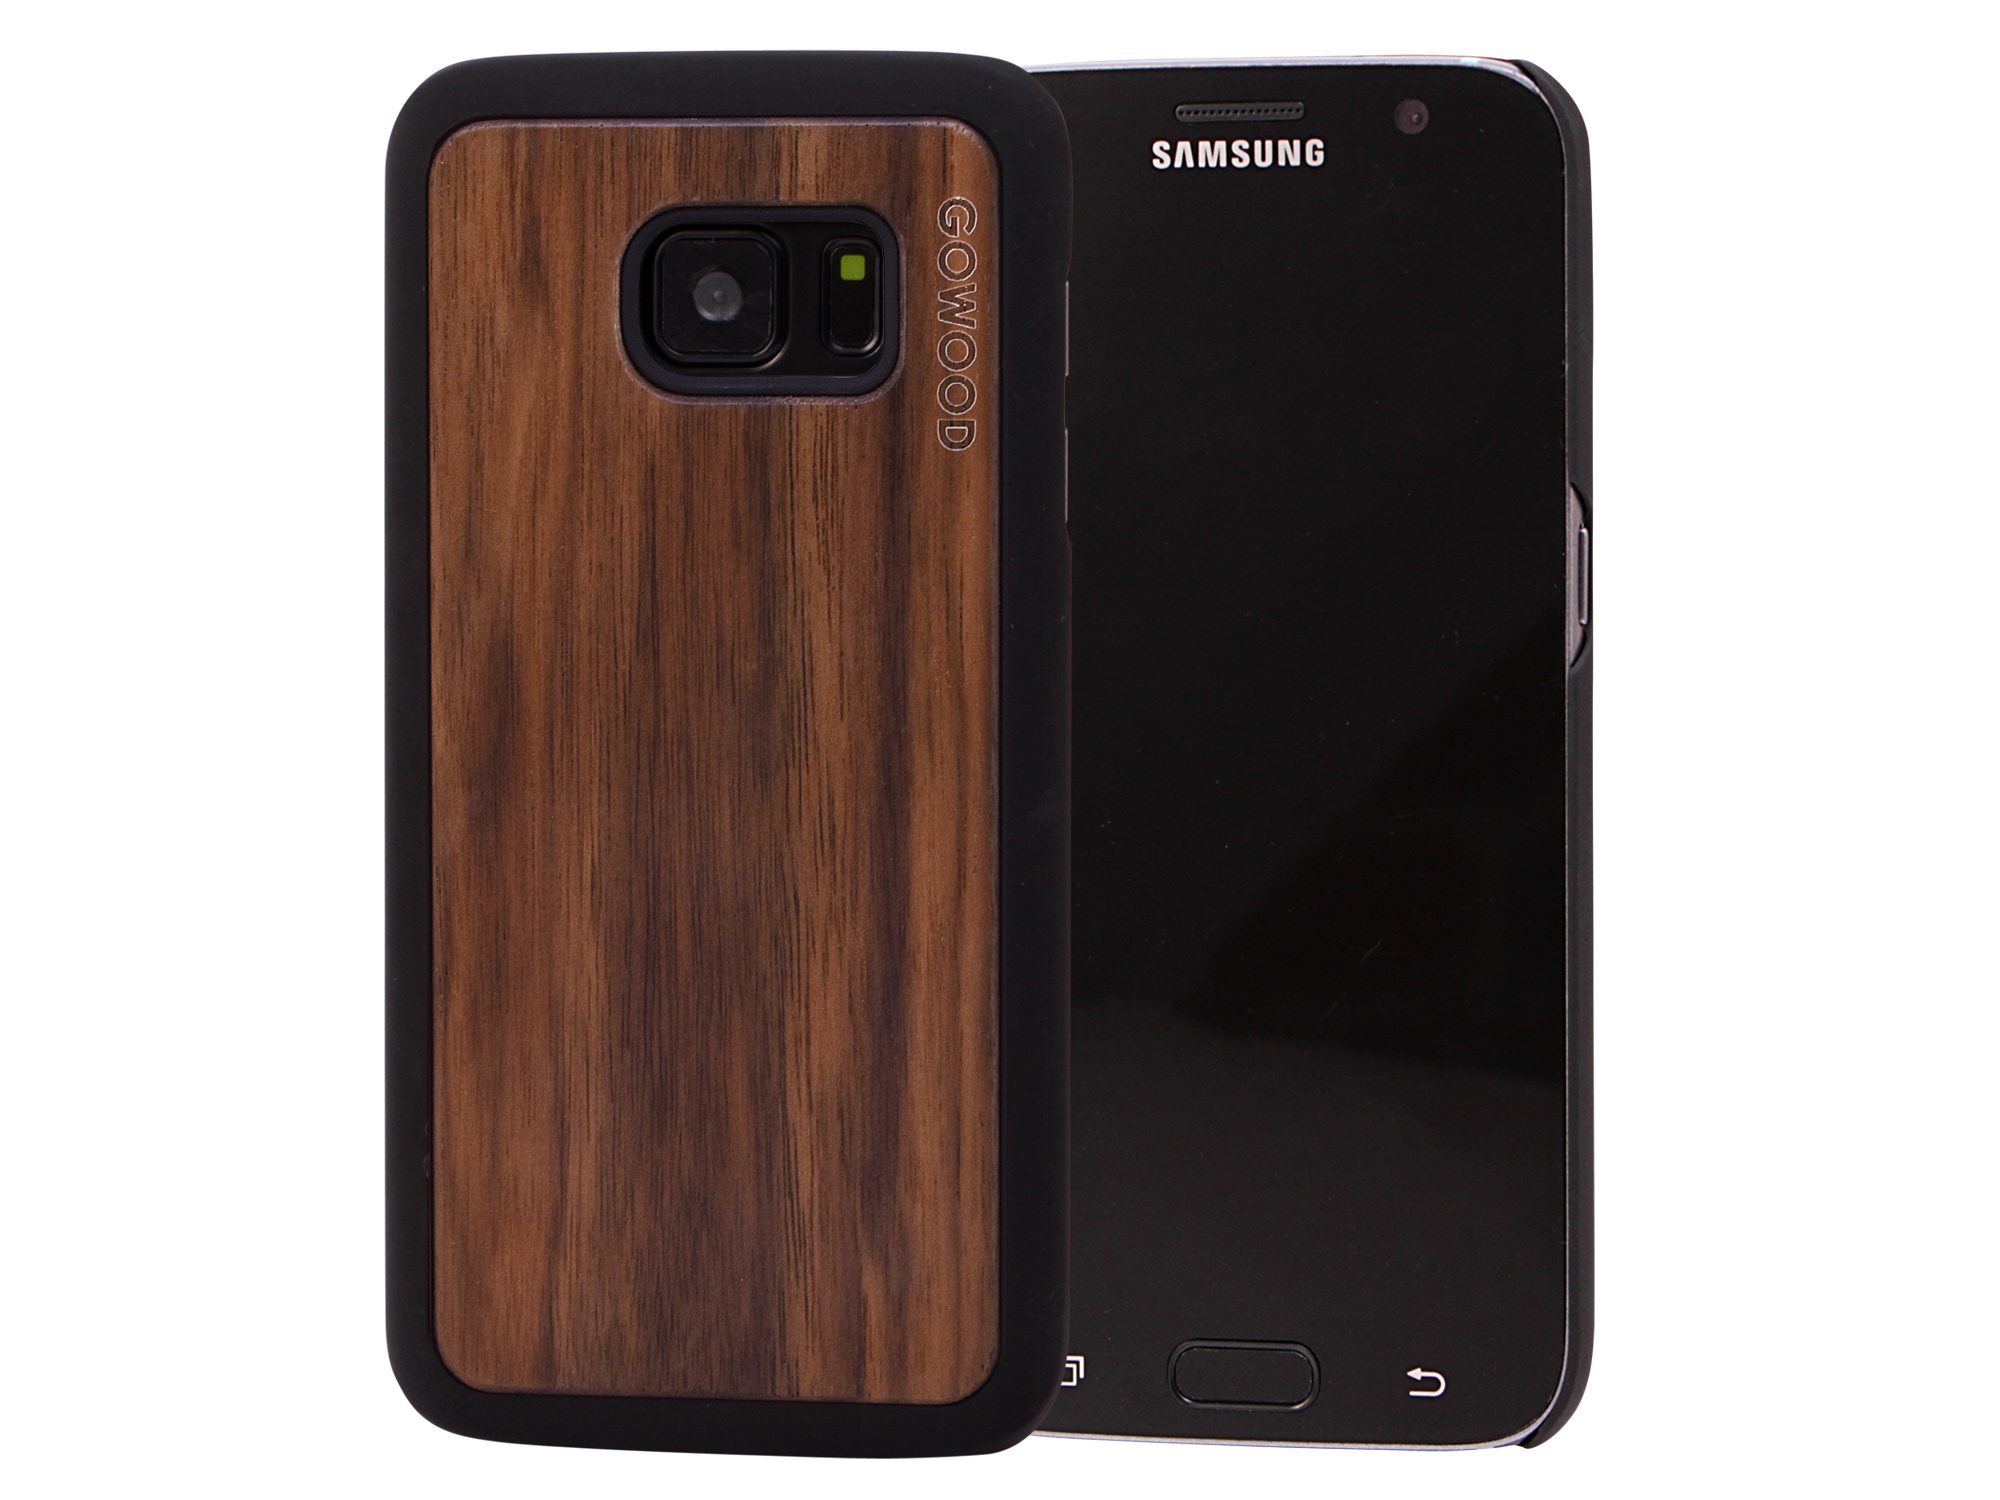 Samsung Galaxy S7 wood case